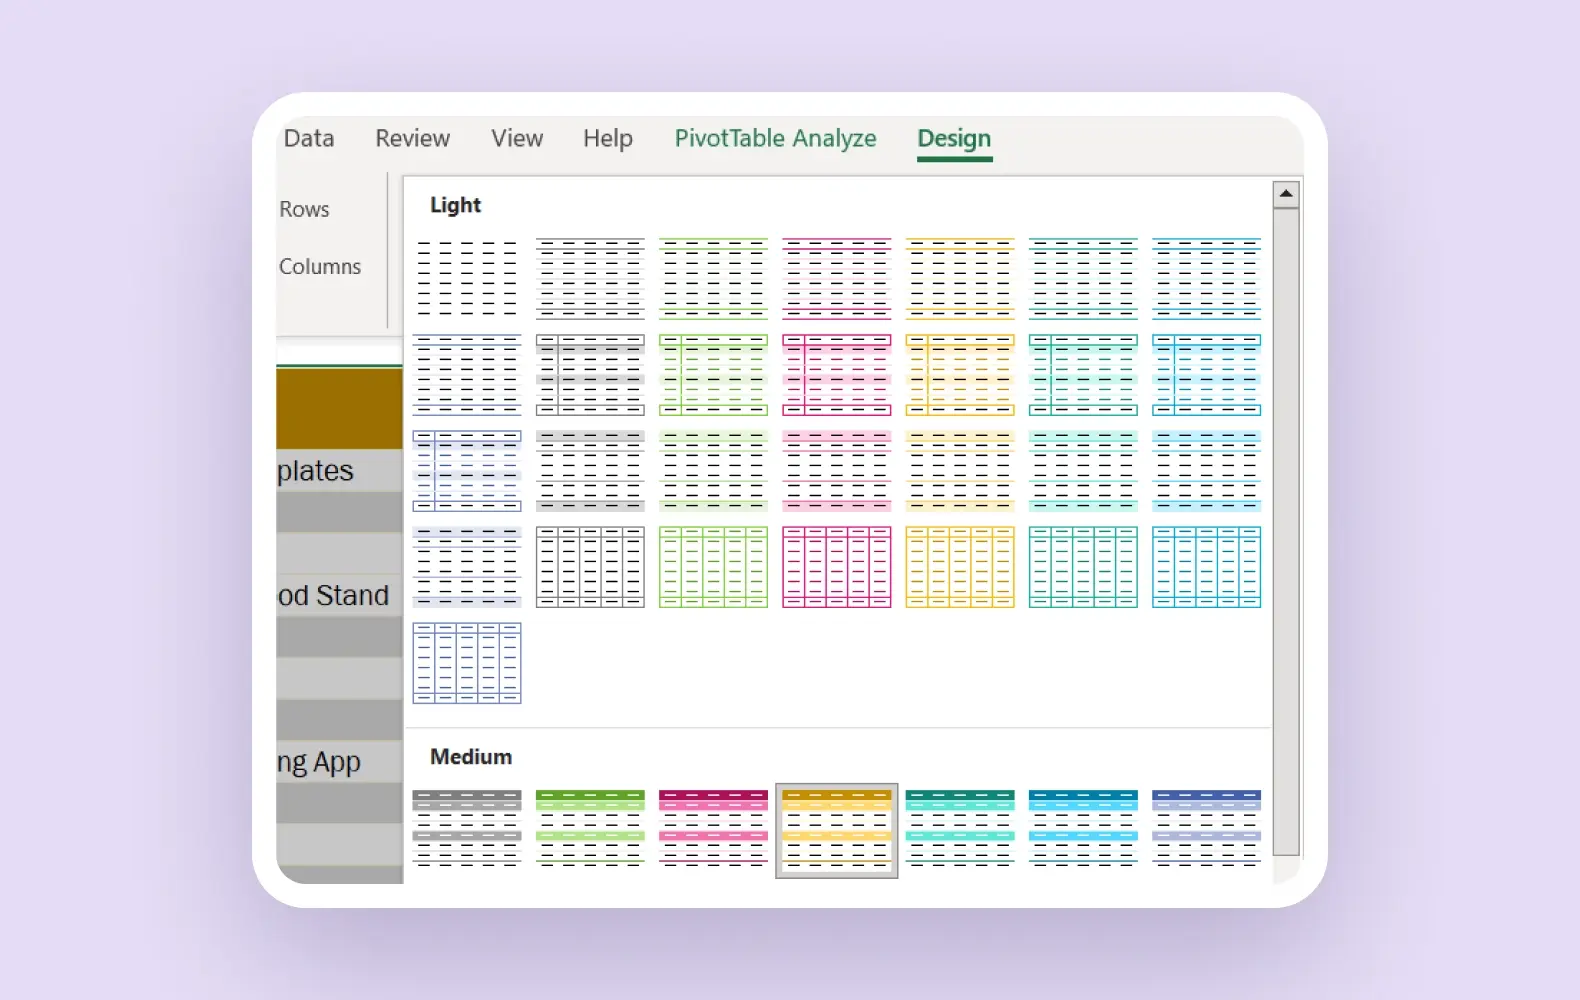 Excel Design view